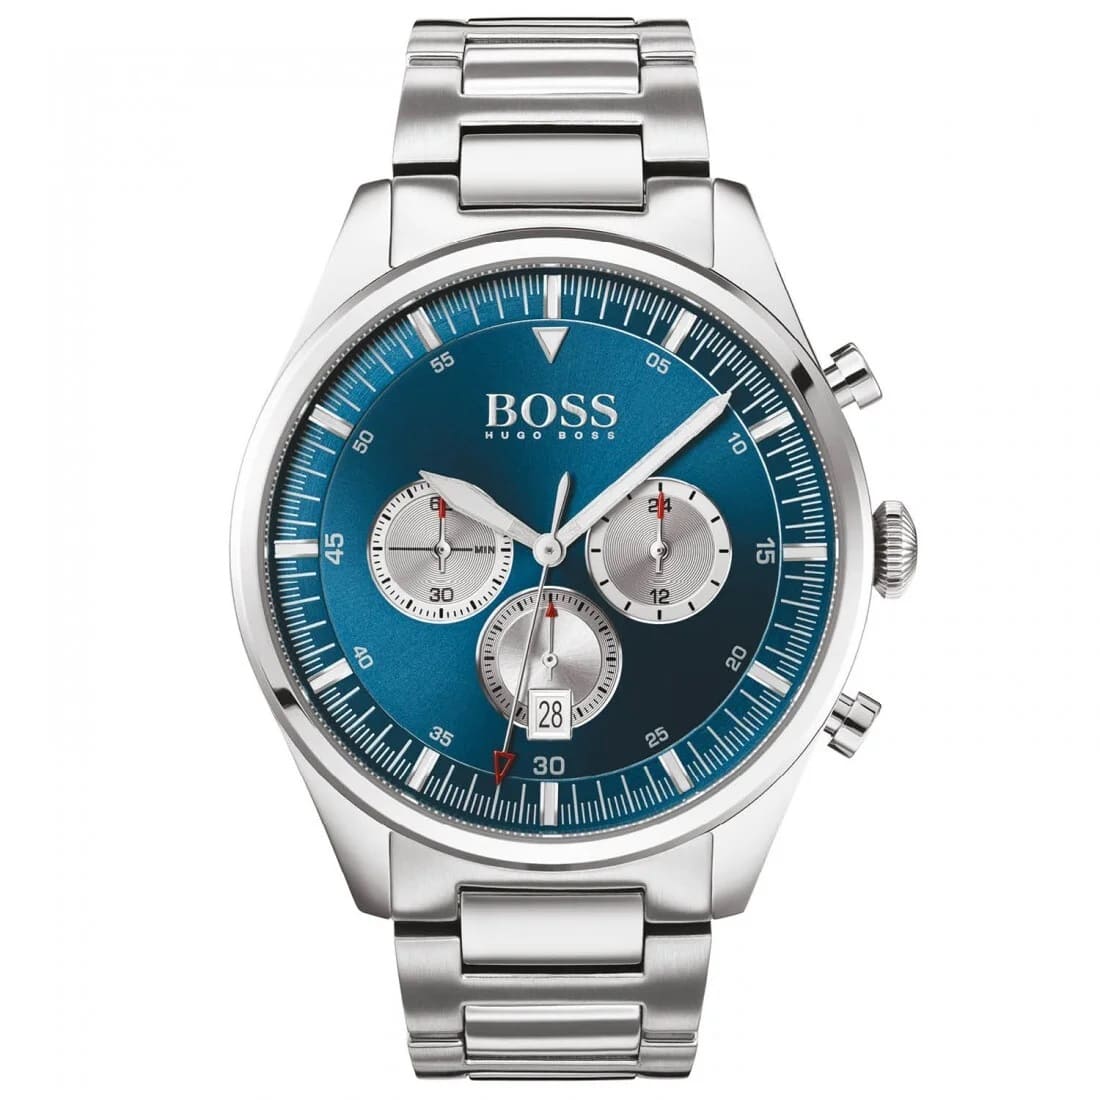 1513713-original-hugo-boss-watch-blue-dial-silver-metal-strap-pioneer-model-for-men-egypt